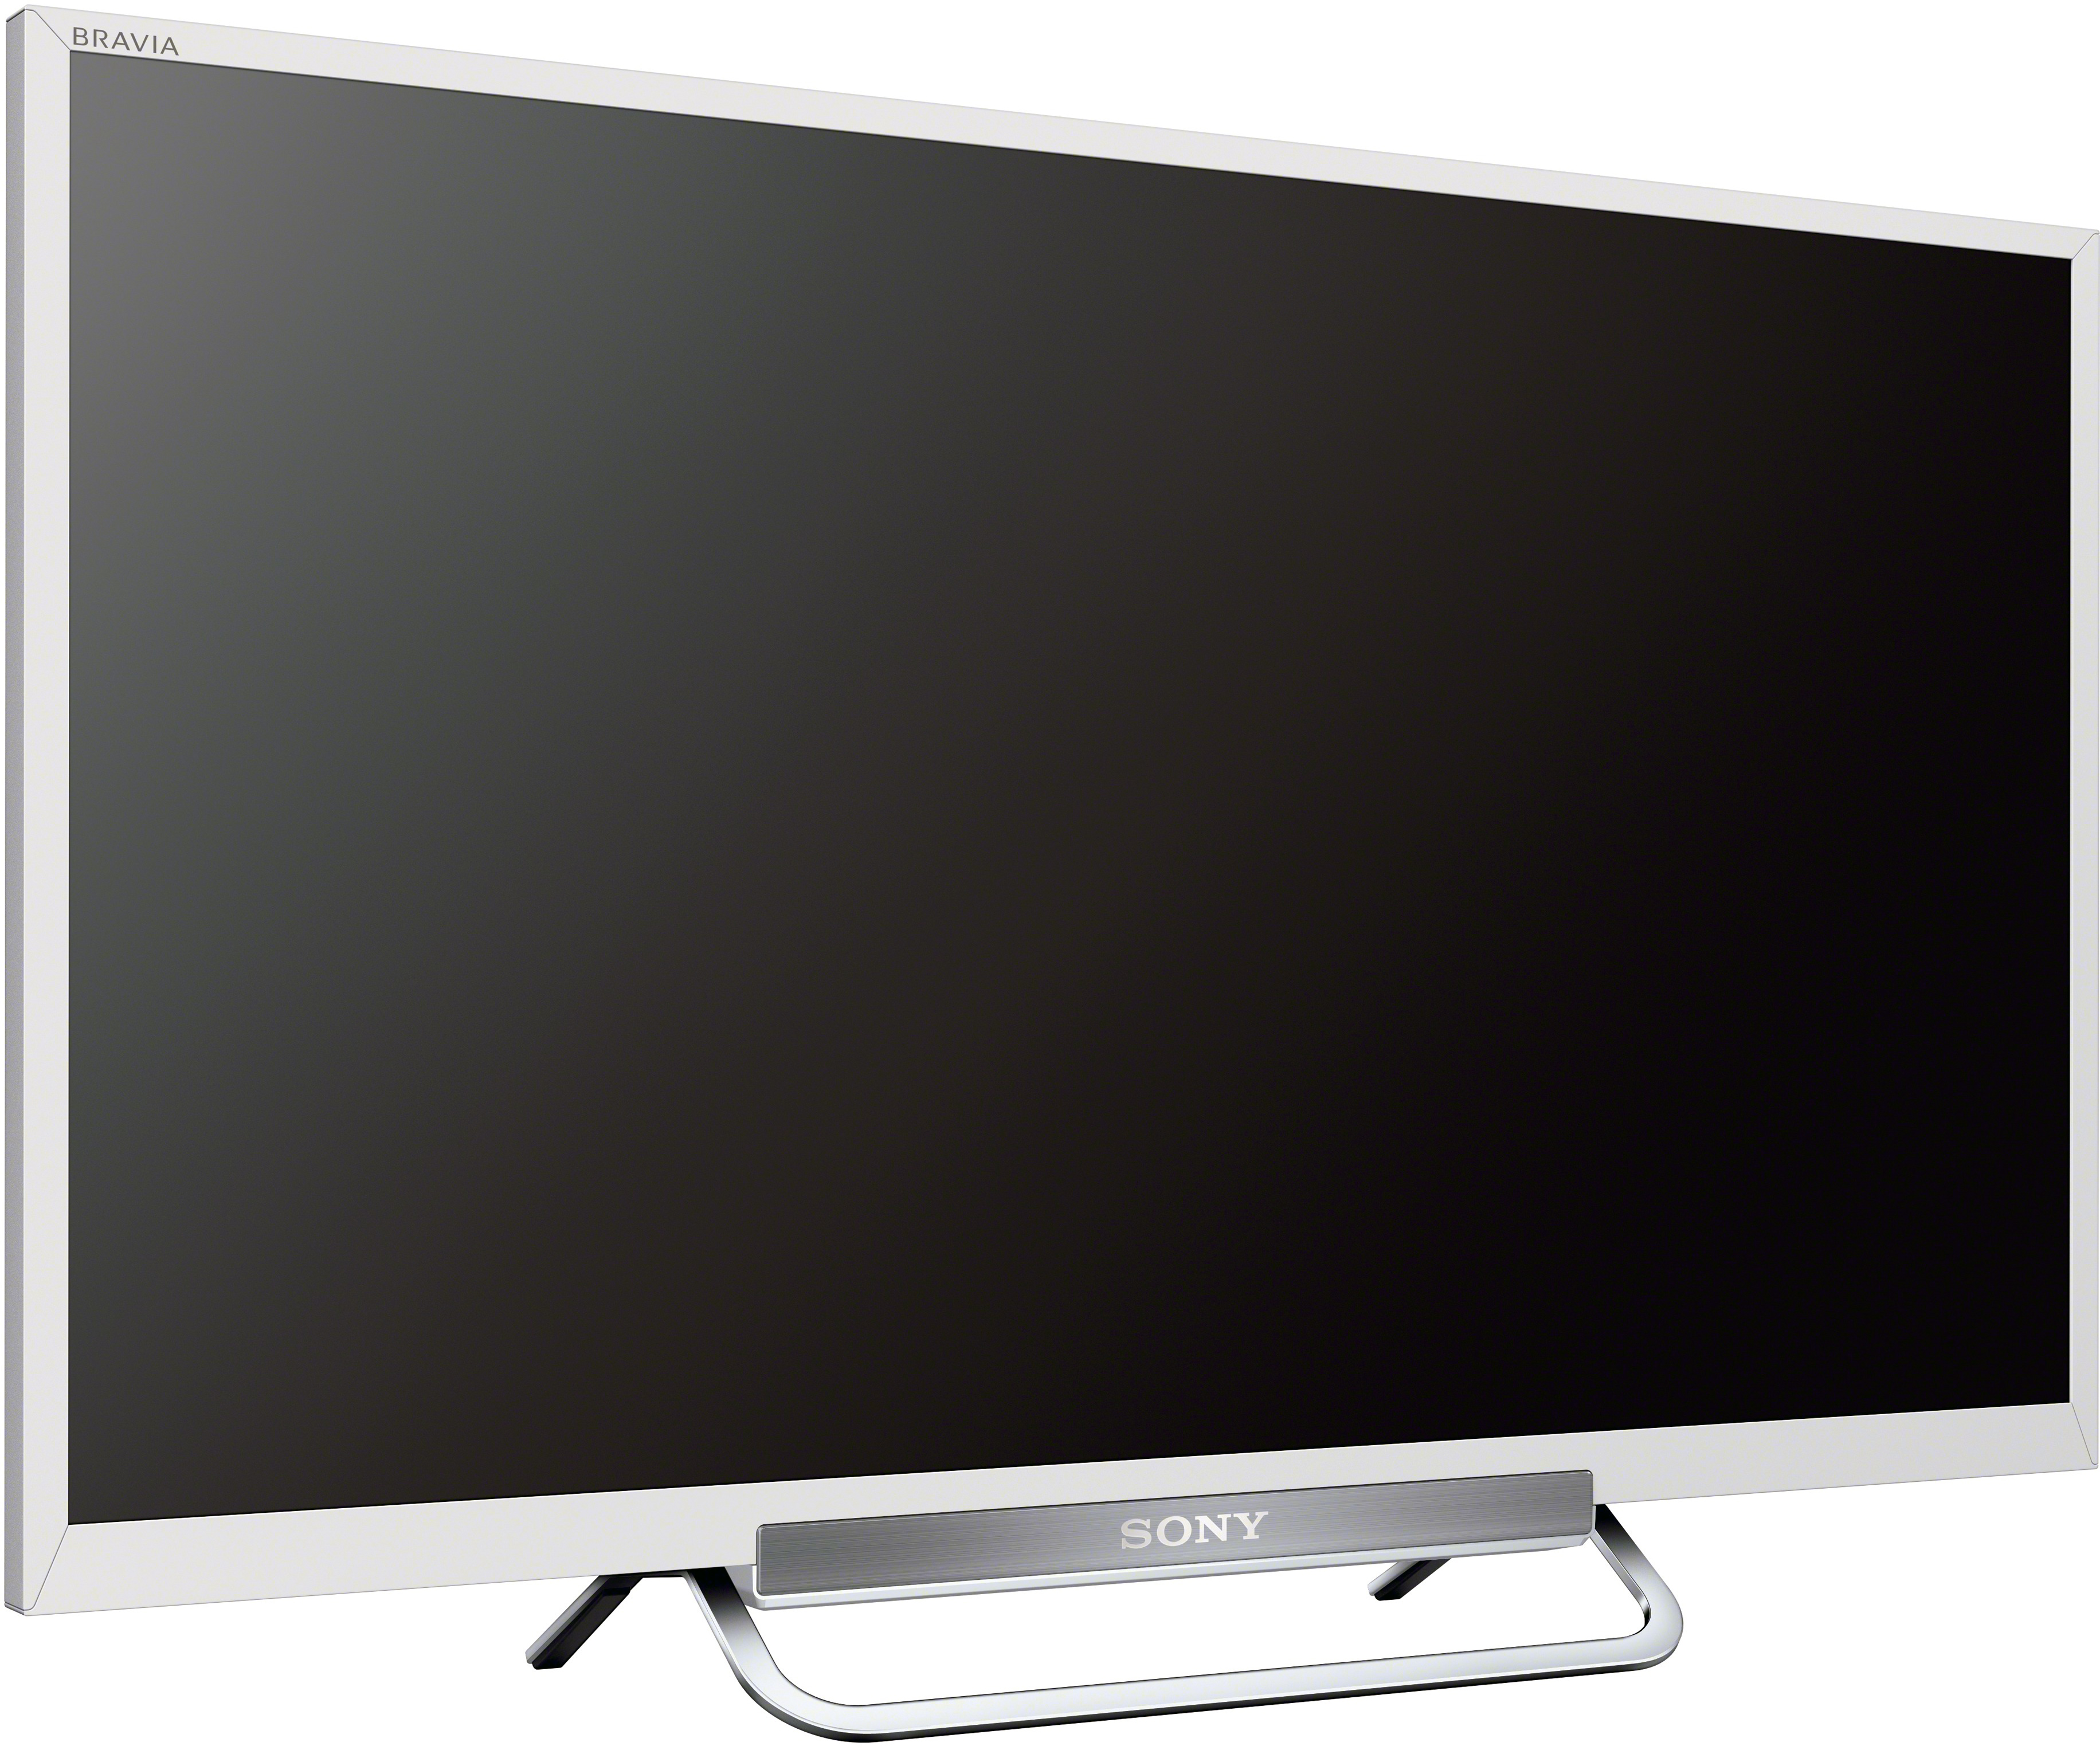 Телевизор 30 см. Sony KDL 24w605a. Sony KDL-24w605a led. LCD телевизор Sony KDL-24w605a. Телевизор Sony KDL-24w605a 24 белый.